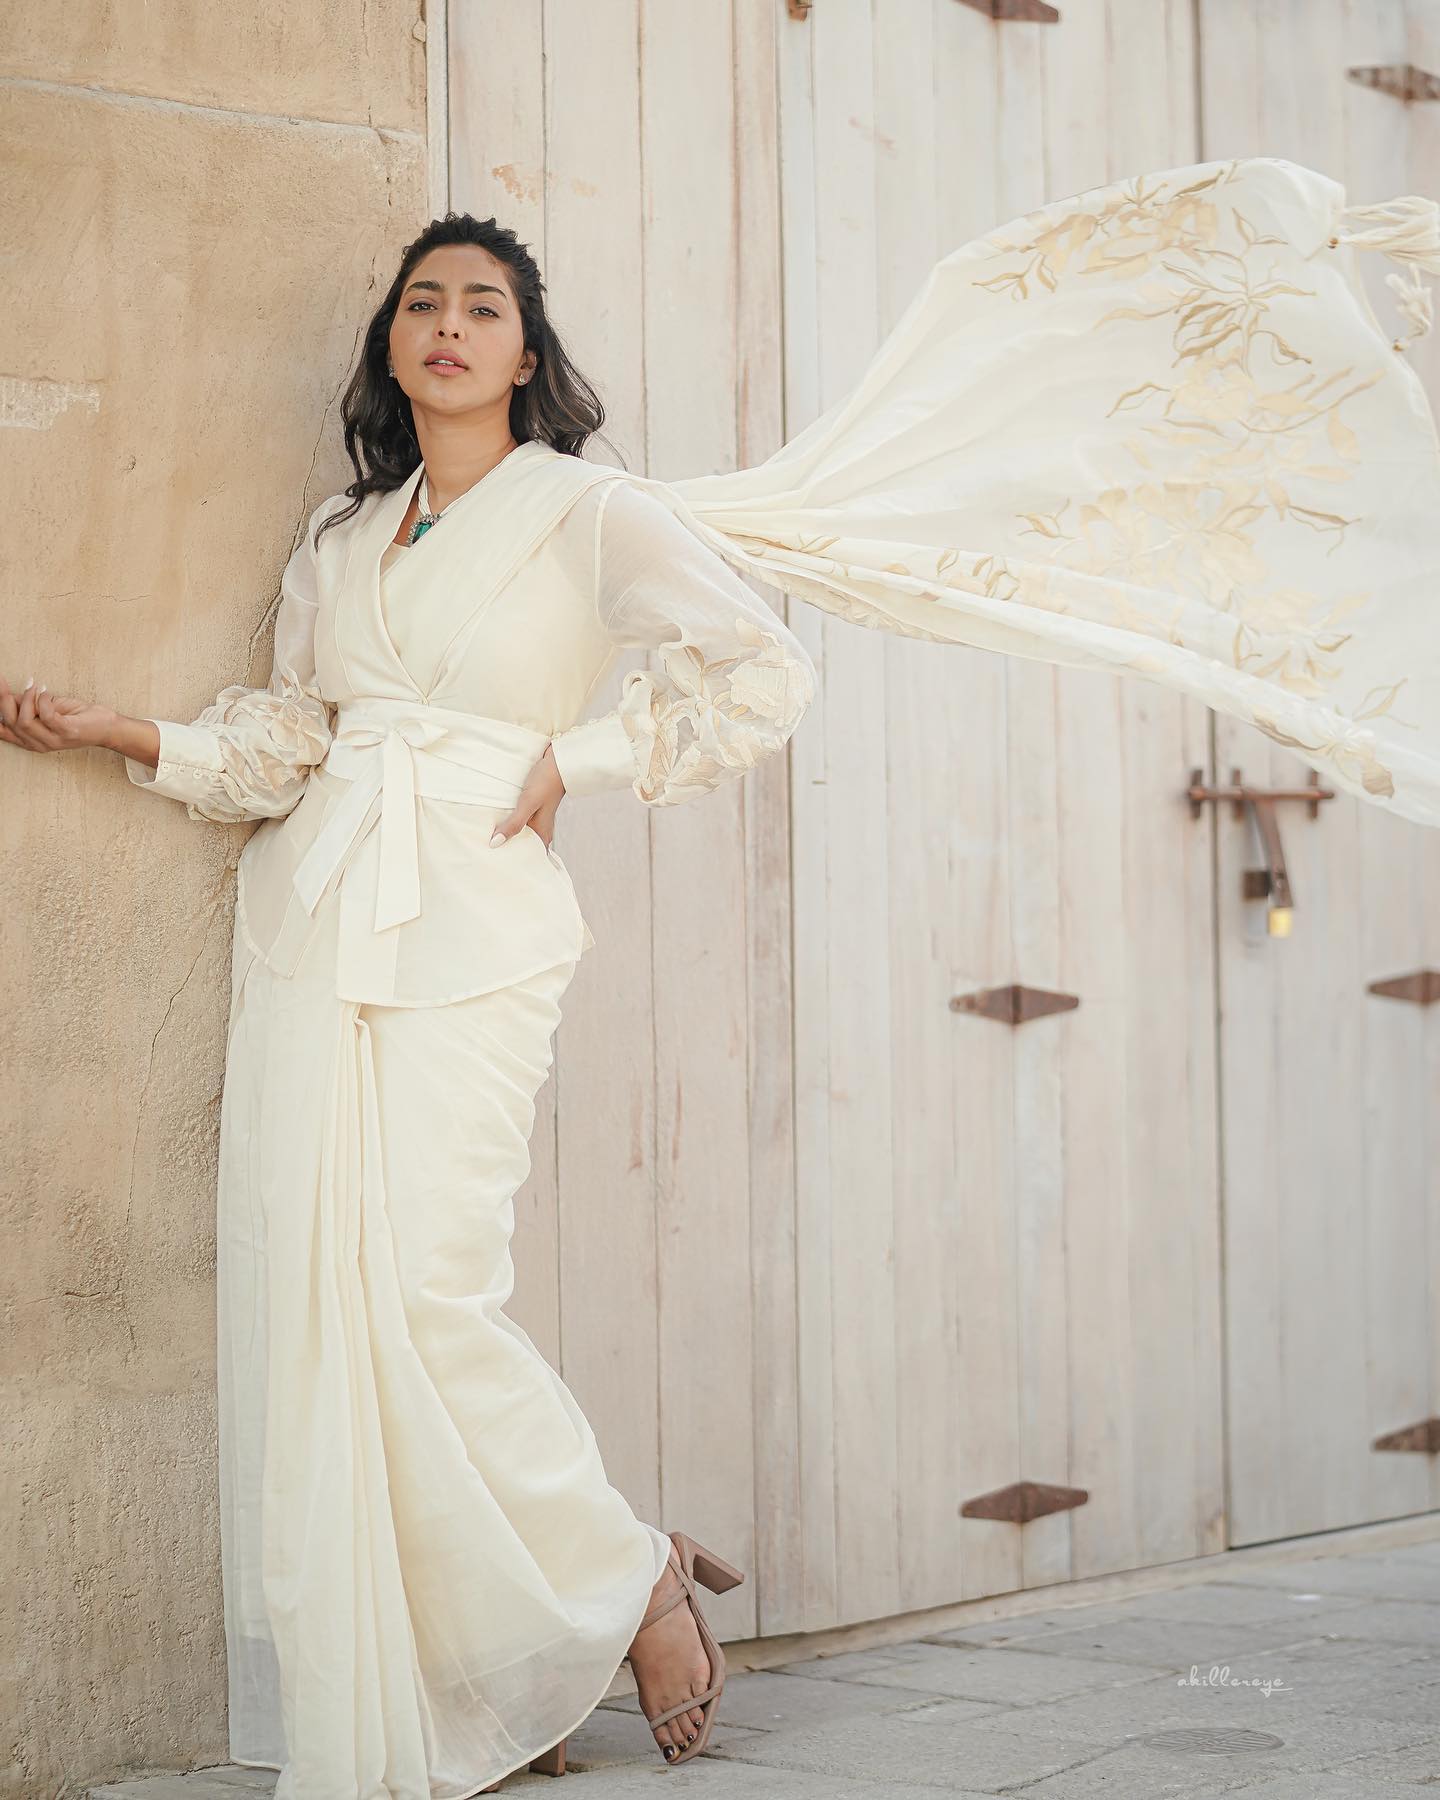 Aishwarya Lekshmi In Off White Sheer Saree With Jacket Look Chic & Classy Ethnical Saree & Western Dress Looks